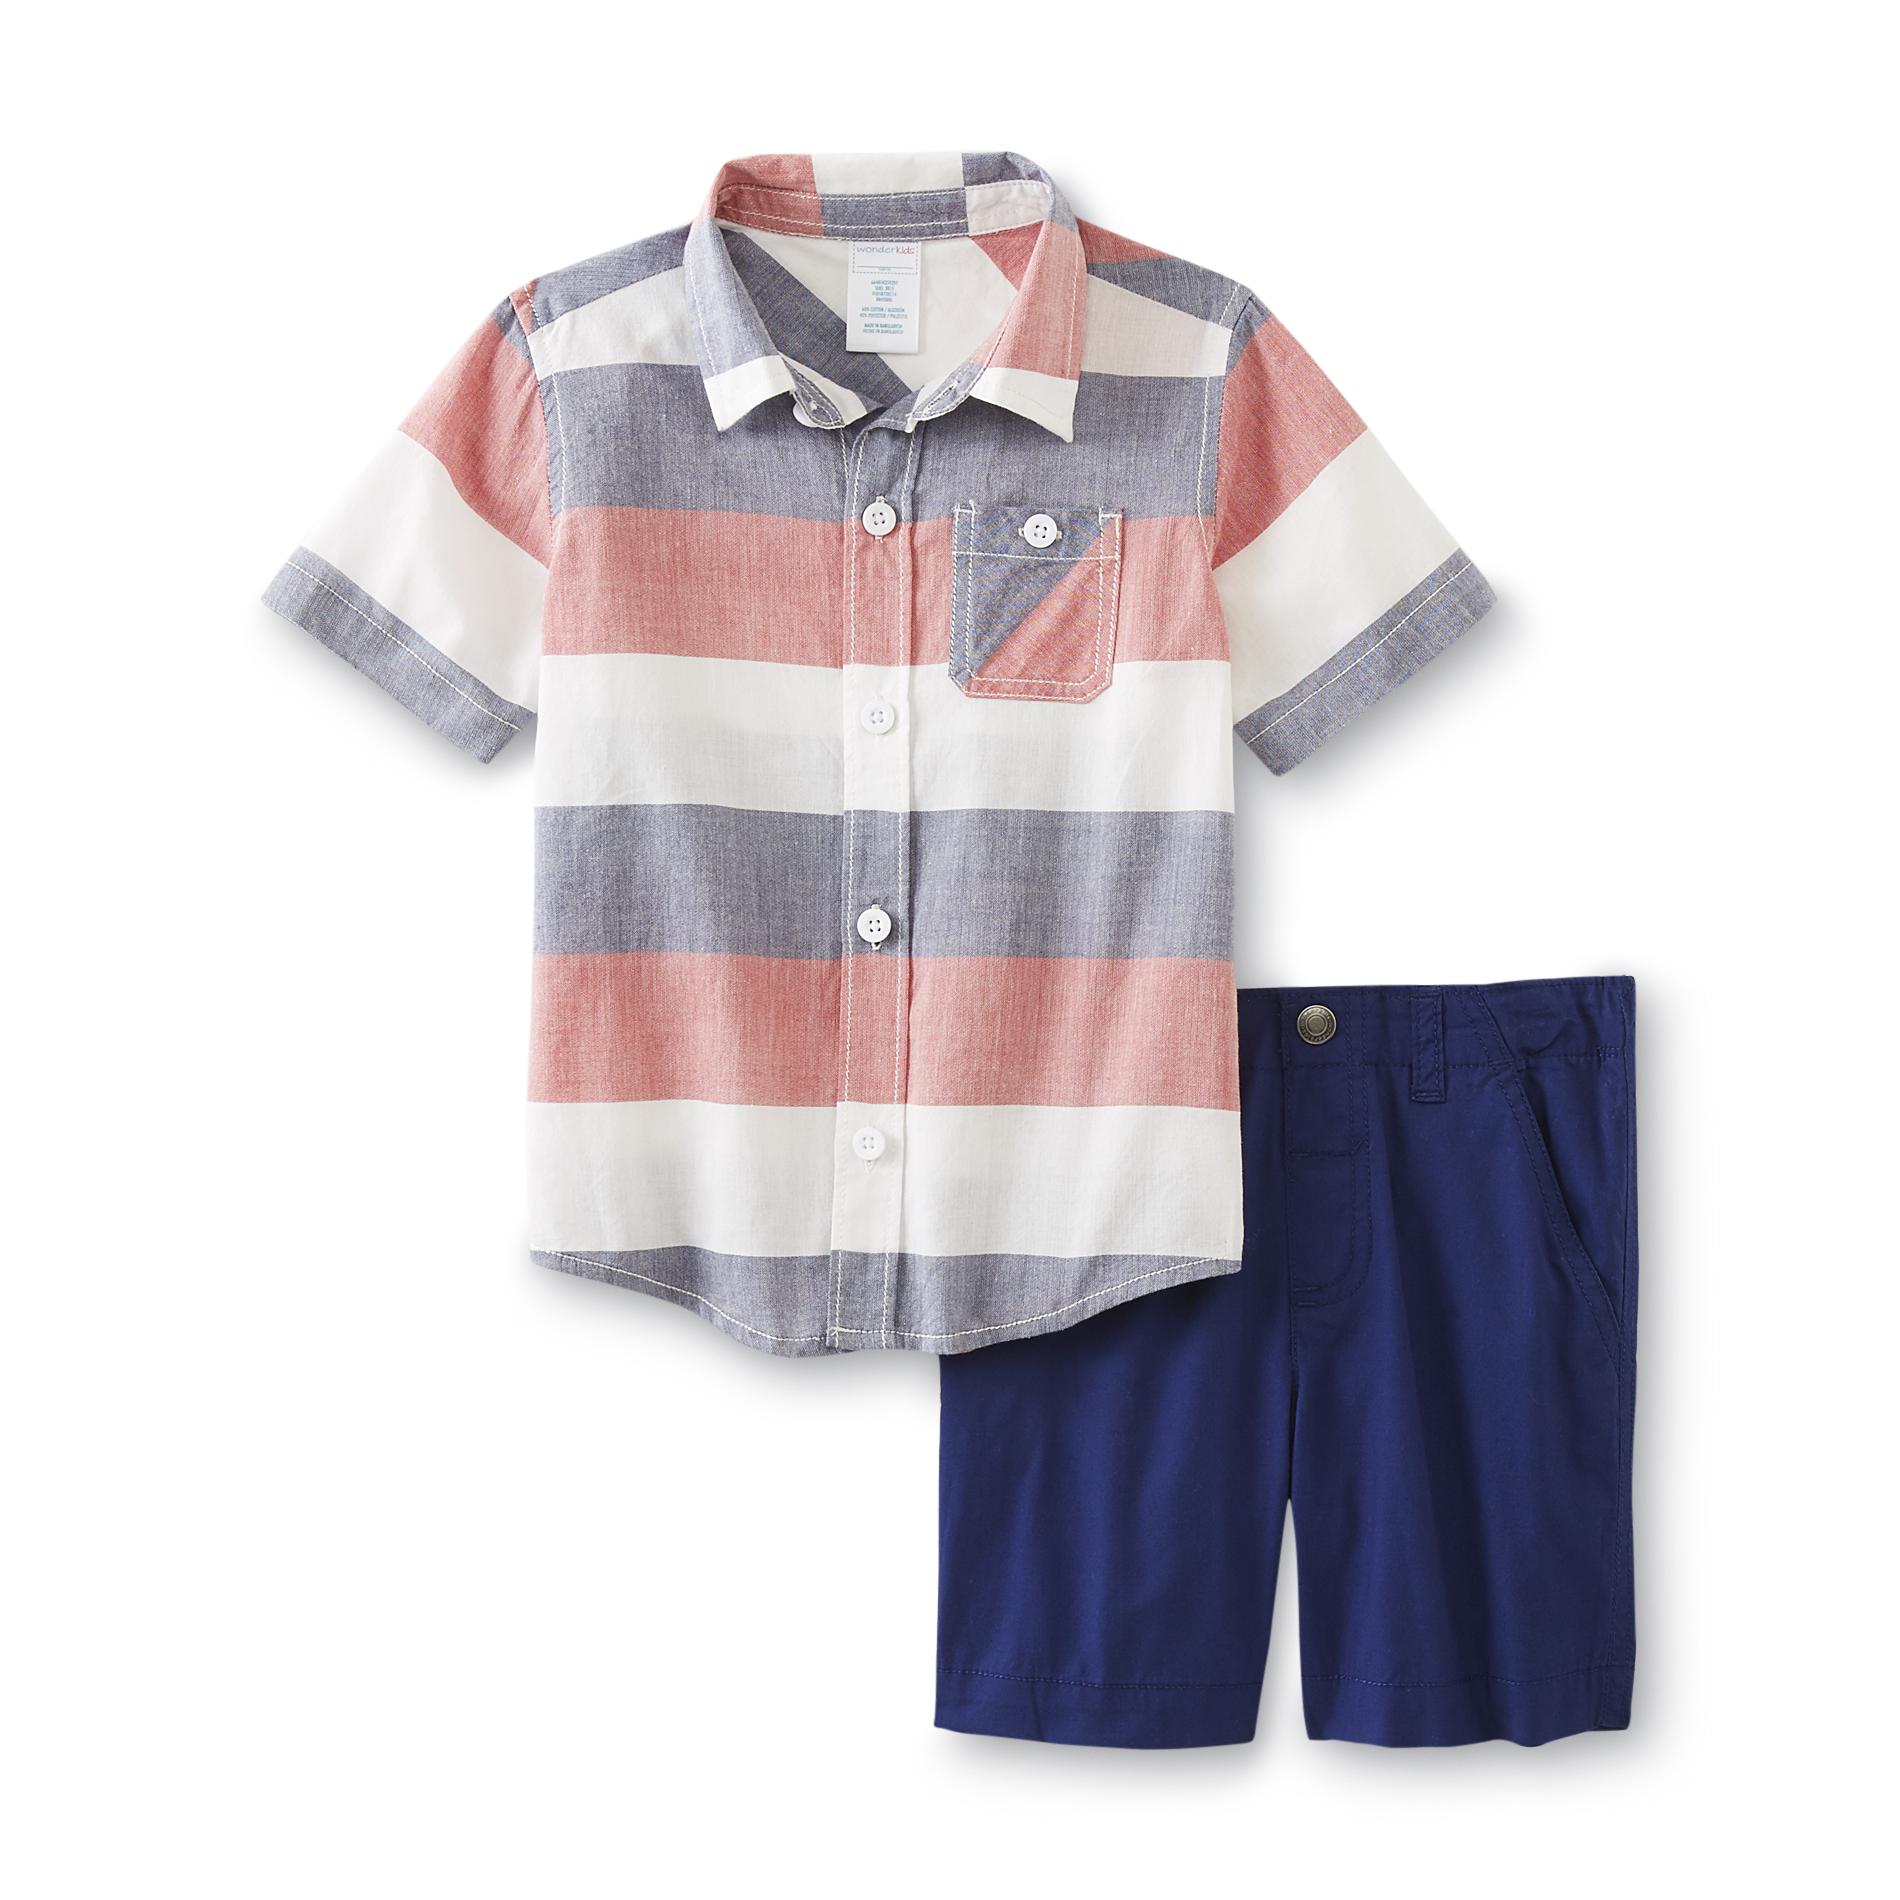 Toddler Boy's Short-Sleeve Shirt & Shorts - Striped